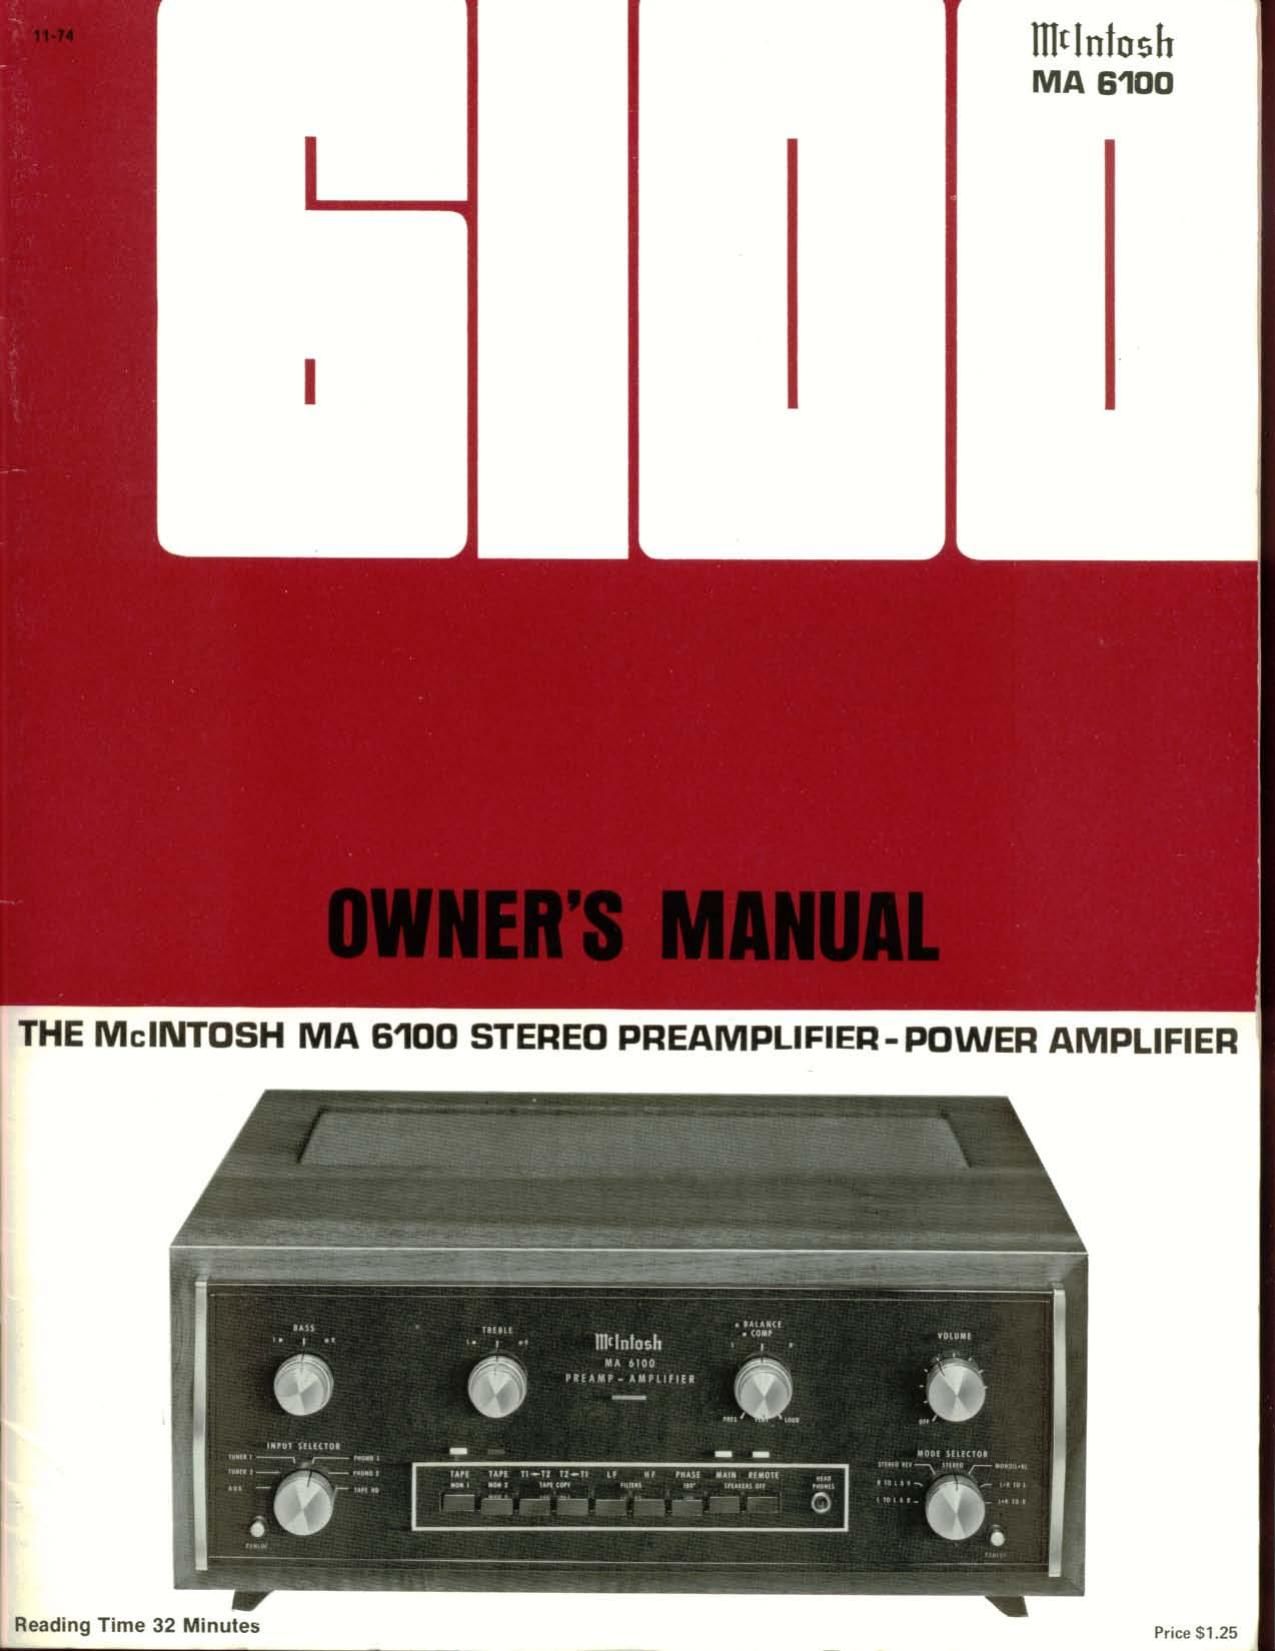 McIntosh MA 6100 Owners Manual